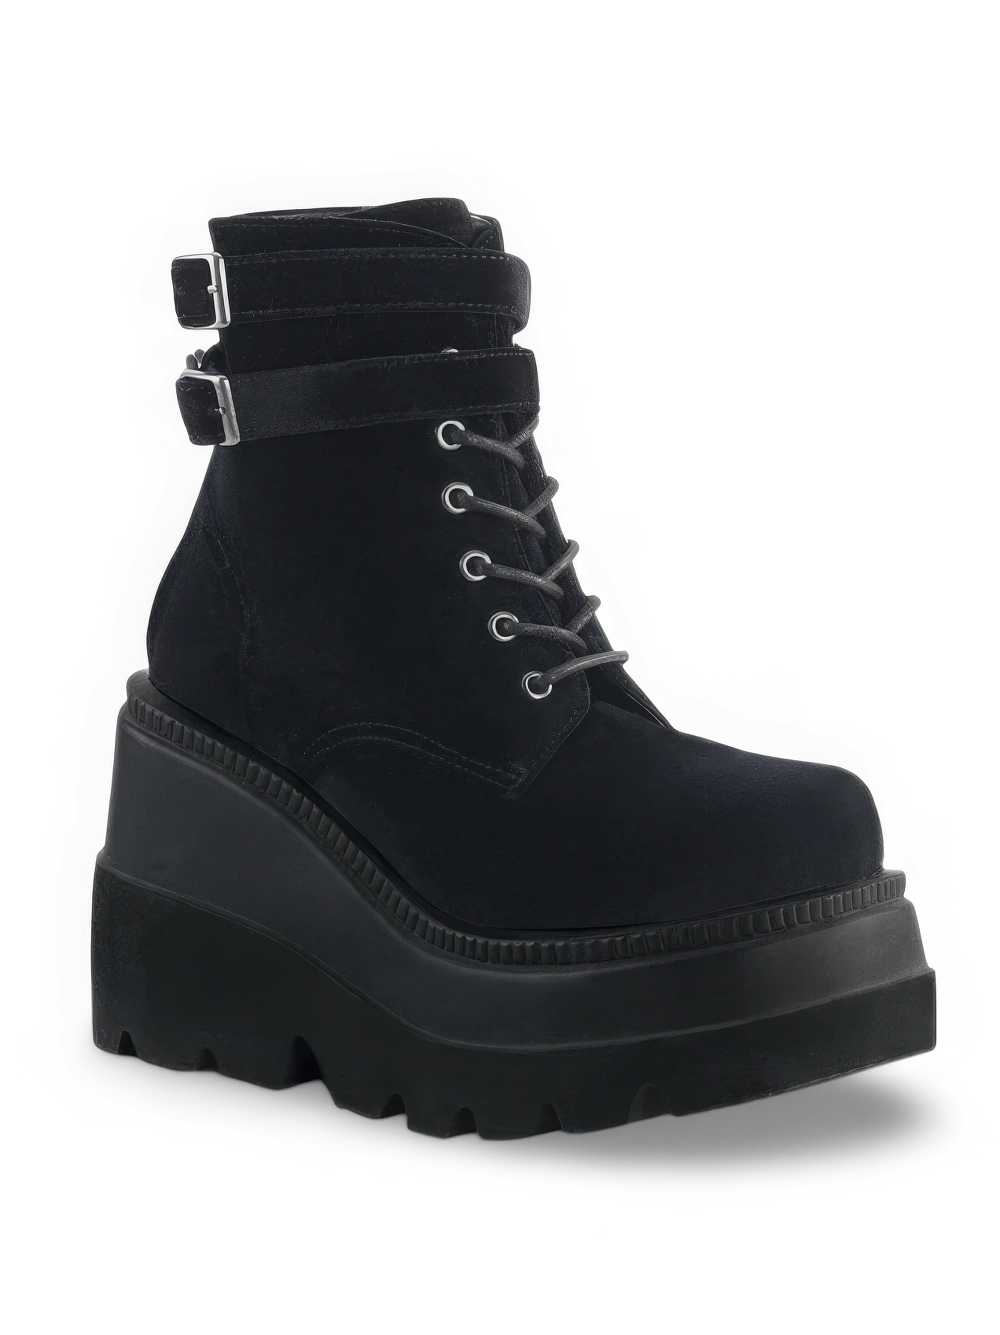 DEMONIA Black Velvet Platform Boots with Straps